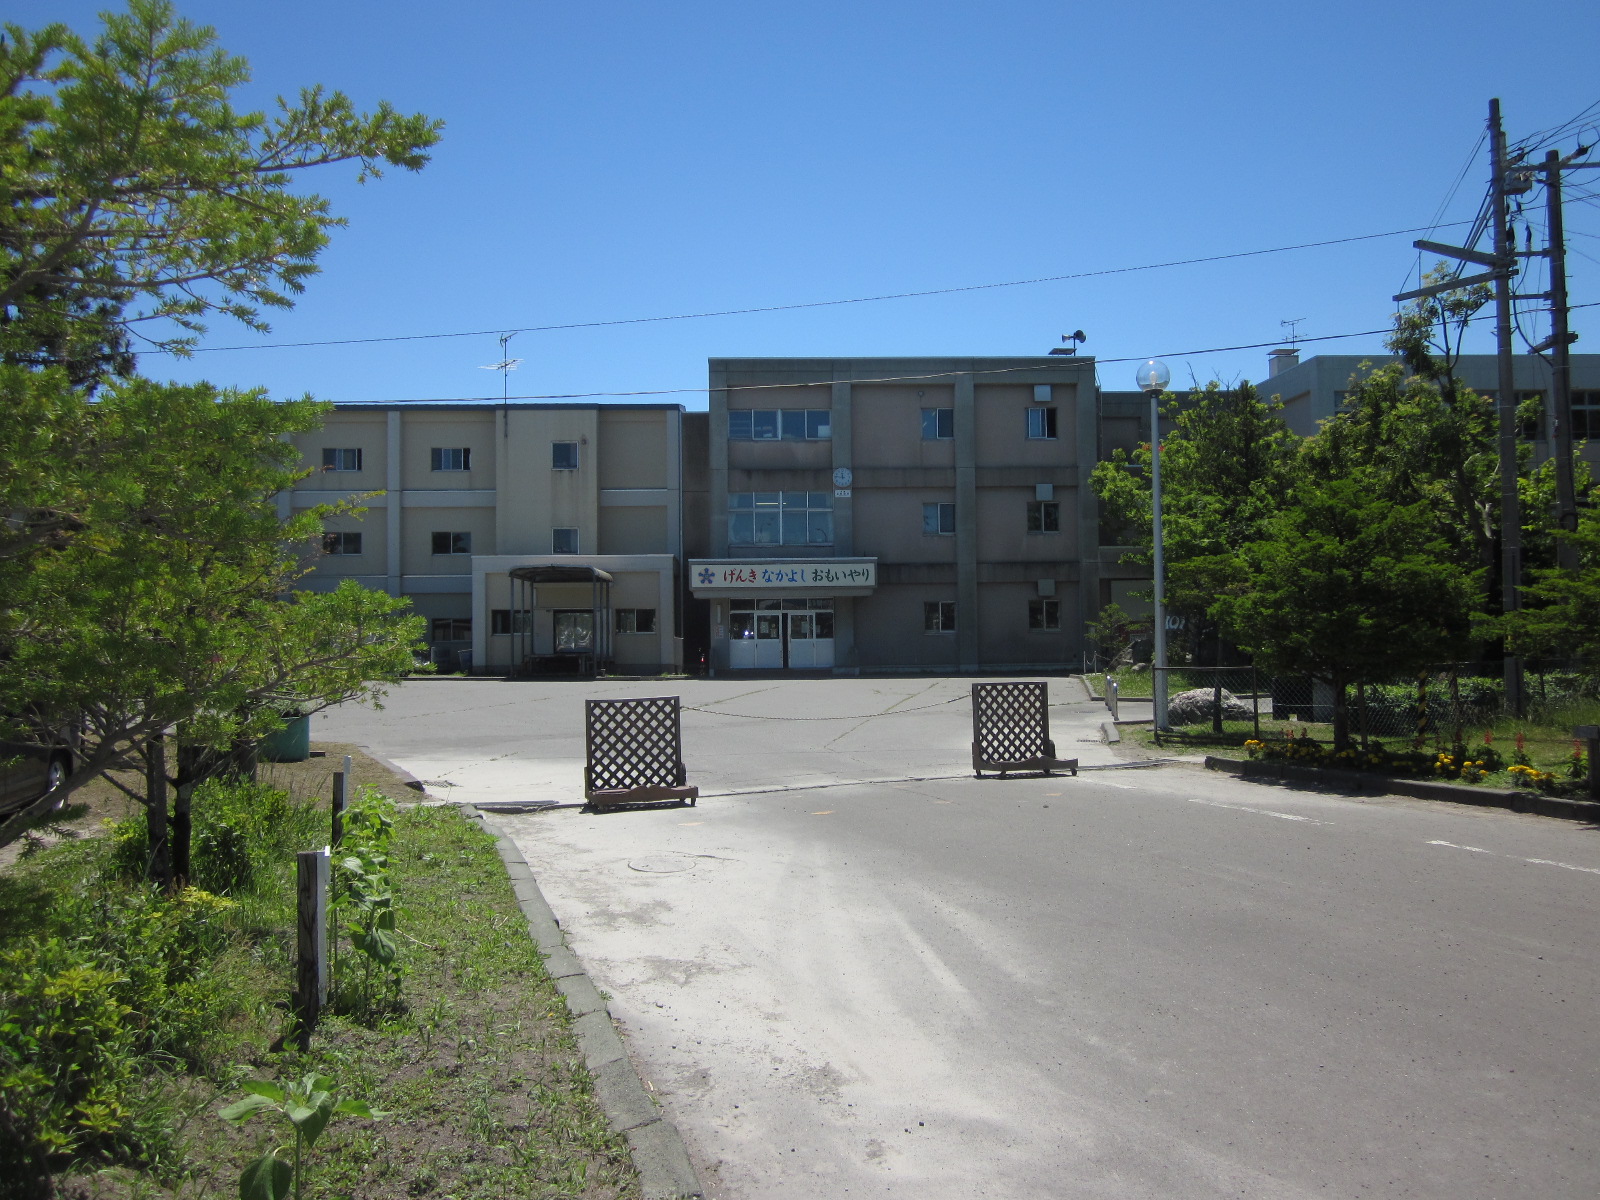 Primary school. 1591m to Tomakomai Municipal Numanohata elementary school (elementary school)